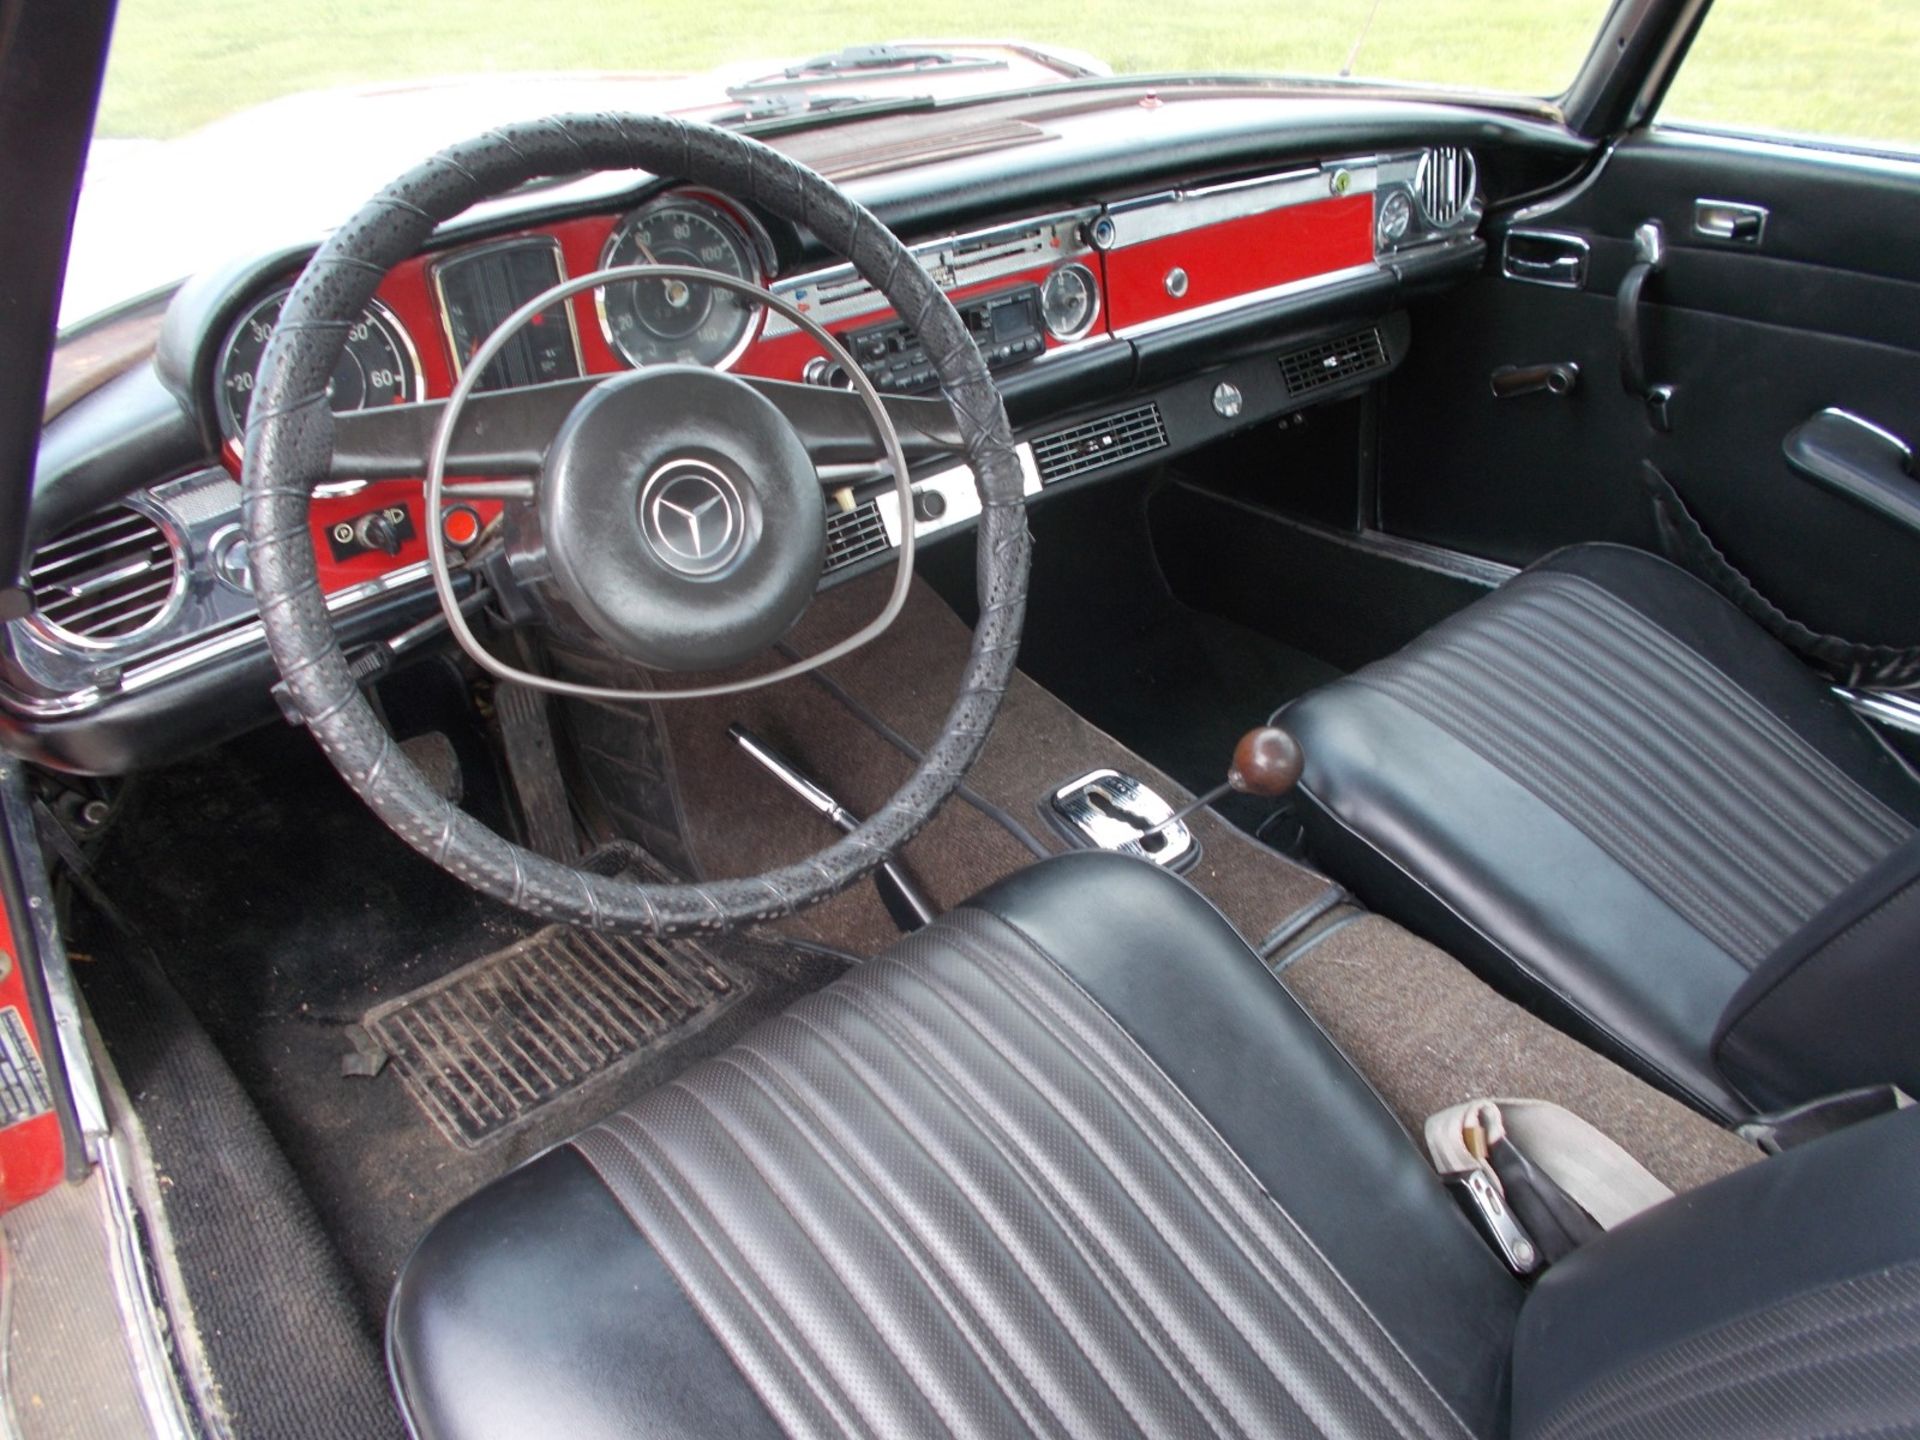 1968 (F) MERCEDES 250SL R107,2.5 LITRE PETROL AUTOMATIC, LEFT HAND DRIVE, FULLY UK REGISTERED*NO VAT - Image 35 of 38